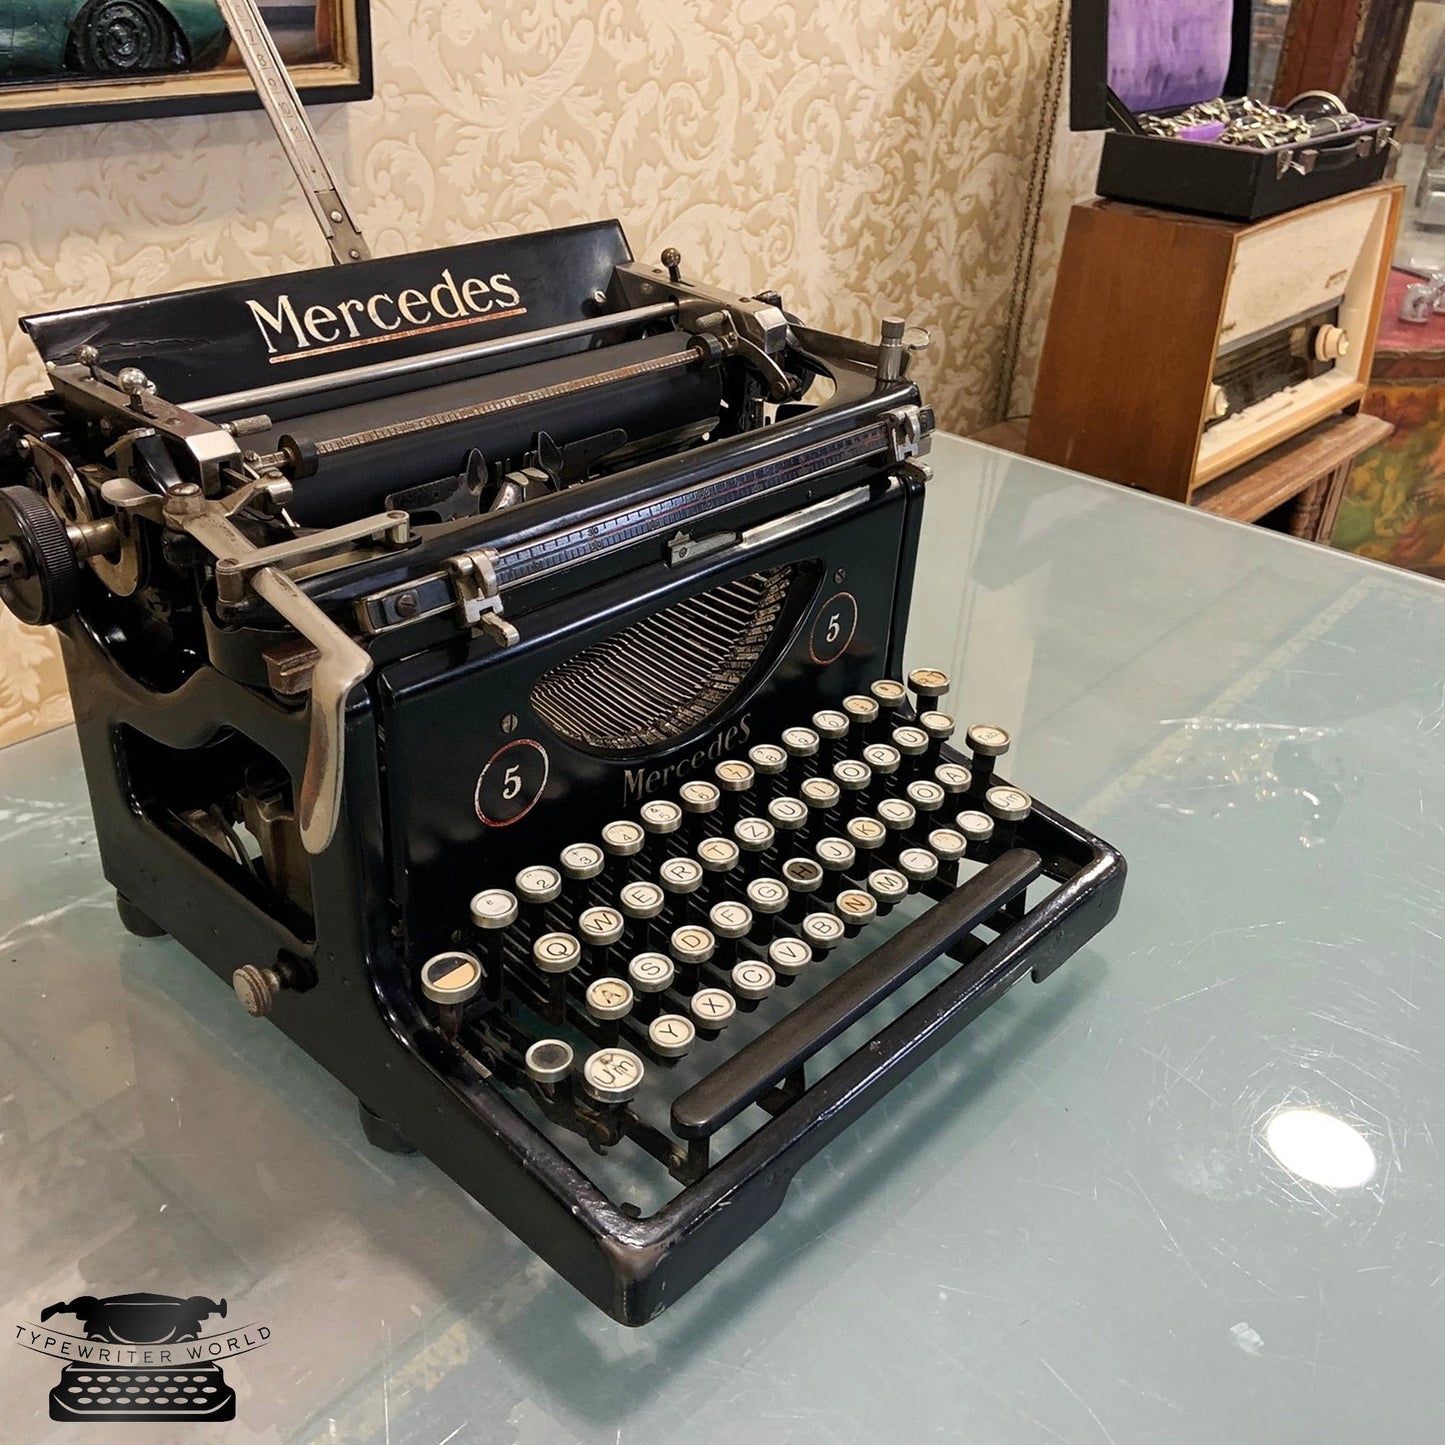 Mercedes Office Typewriter| Working Typewriter | Old Typewriter | Antique Typewriter | Vintage Typewriter,typewriter working